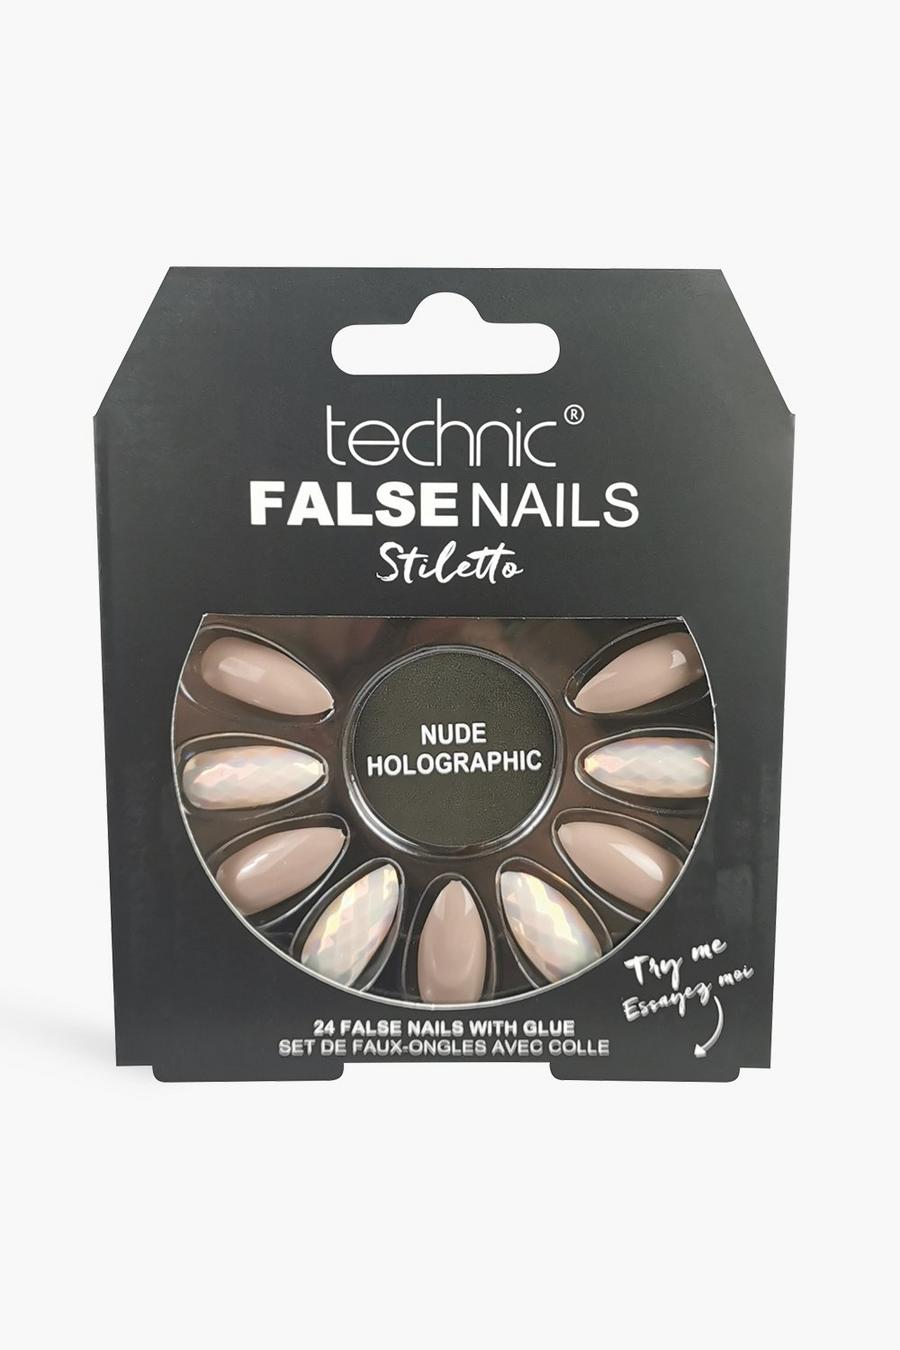 Technic False Nails - Stiletto Nude Holographic